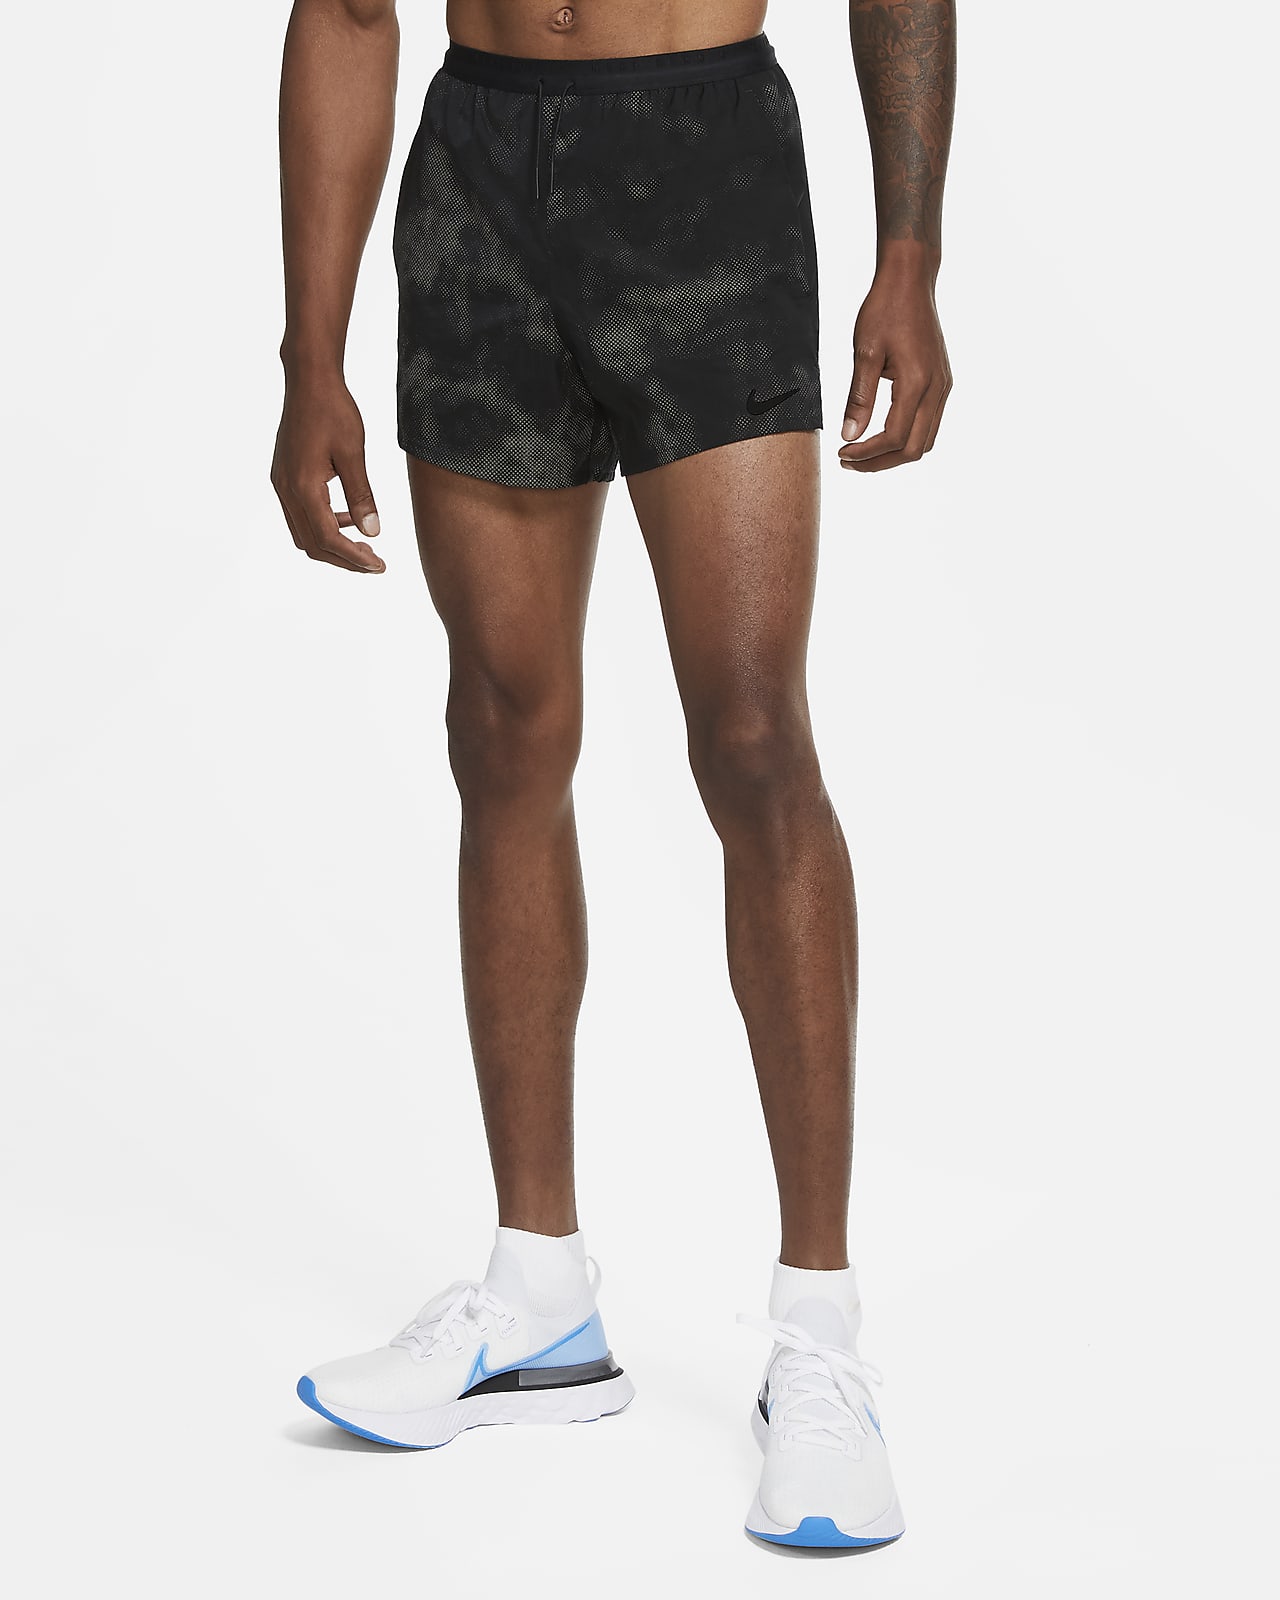 discount nike running shorts